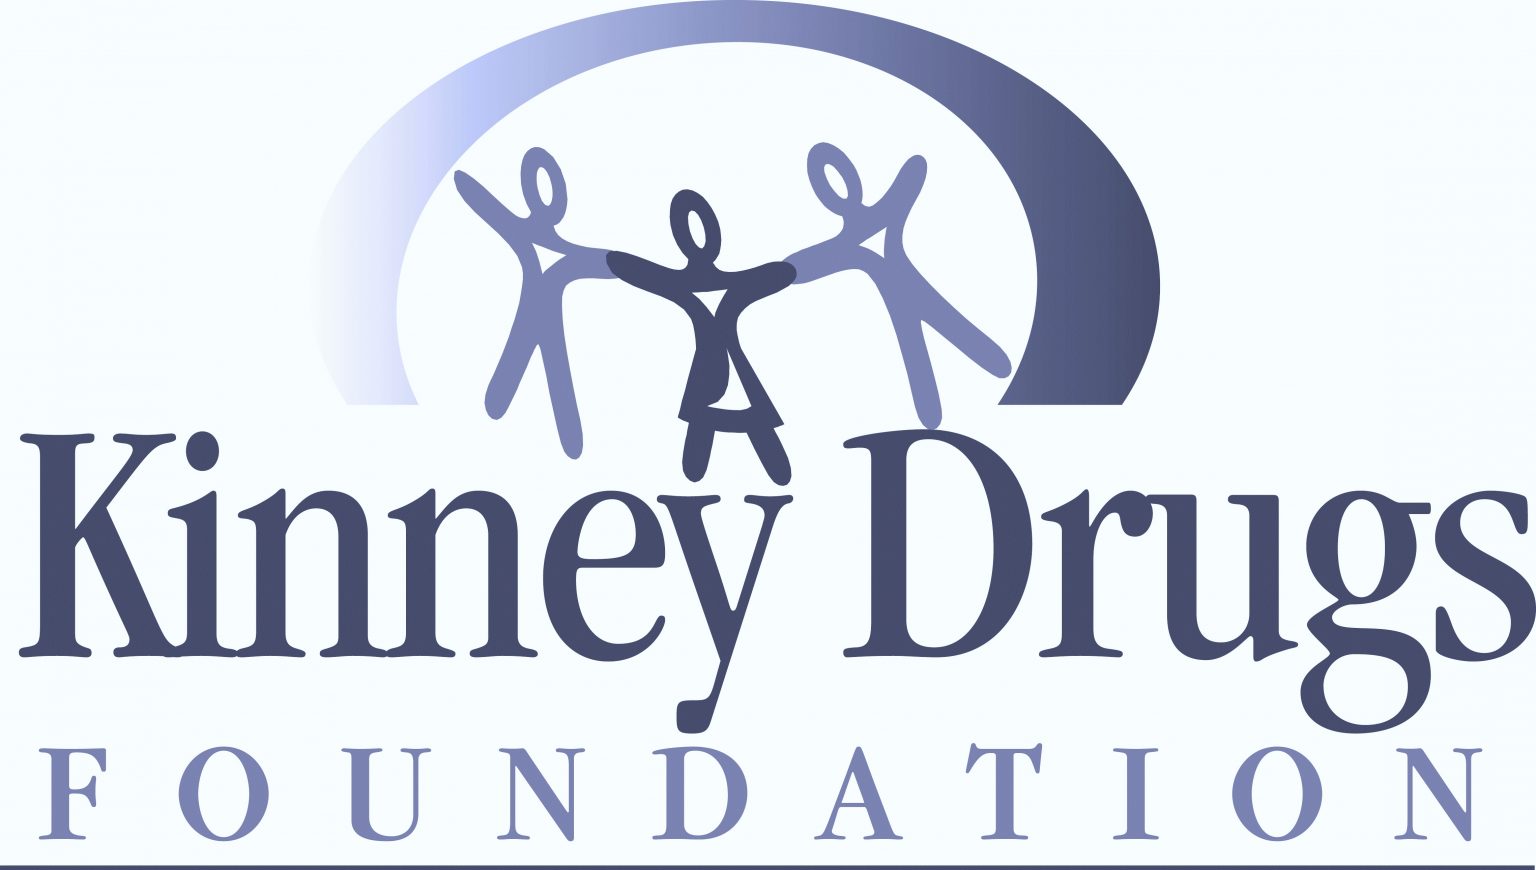 kinney drugs foundation logo